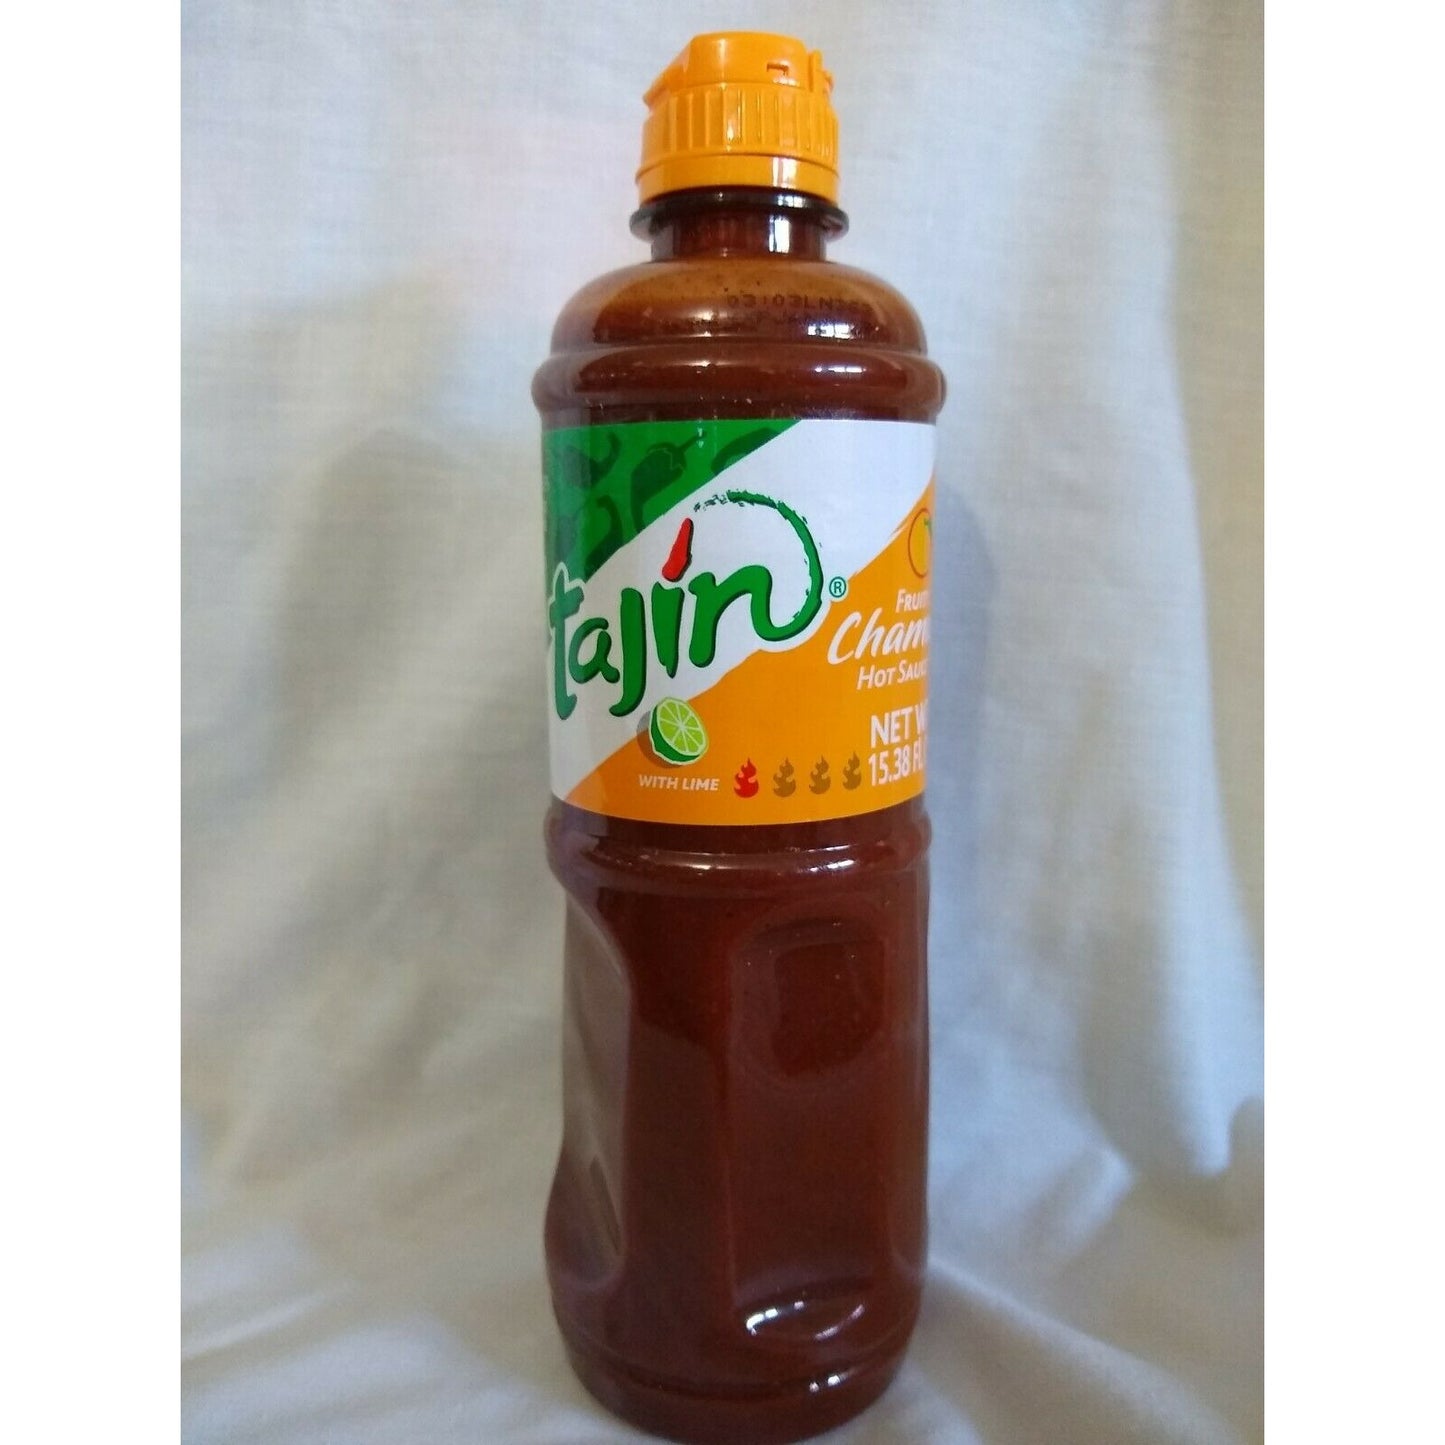 TAJIN CHAMOY LIQUID 455ml, a fruity liquid Mexican Hot Sauce